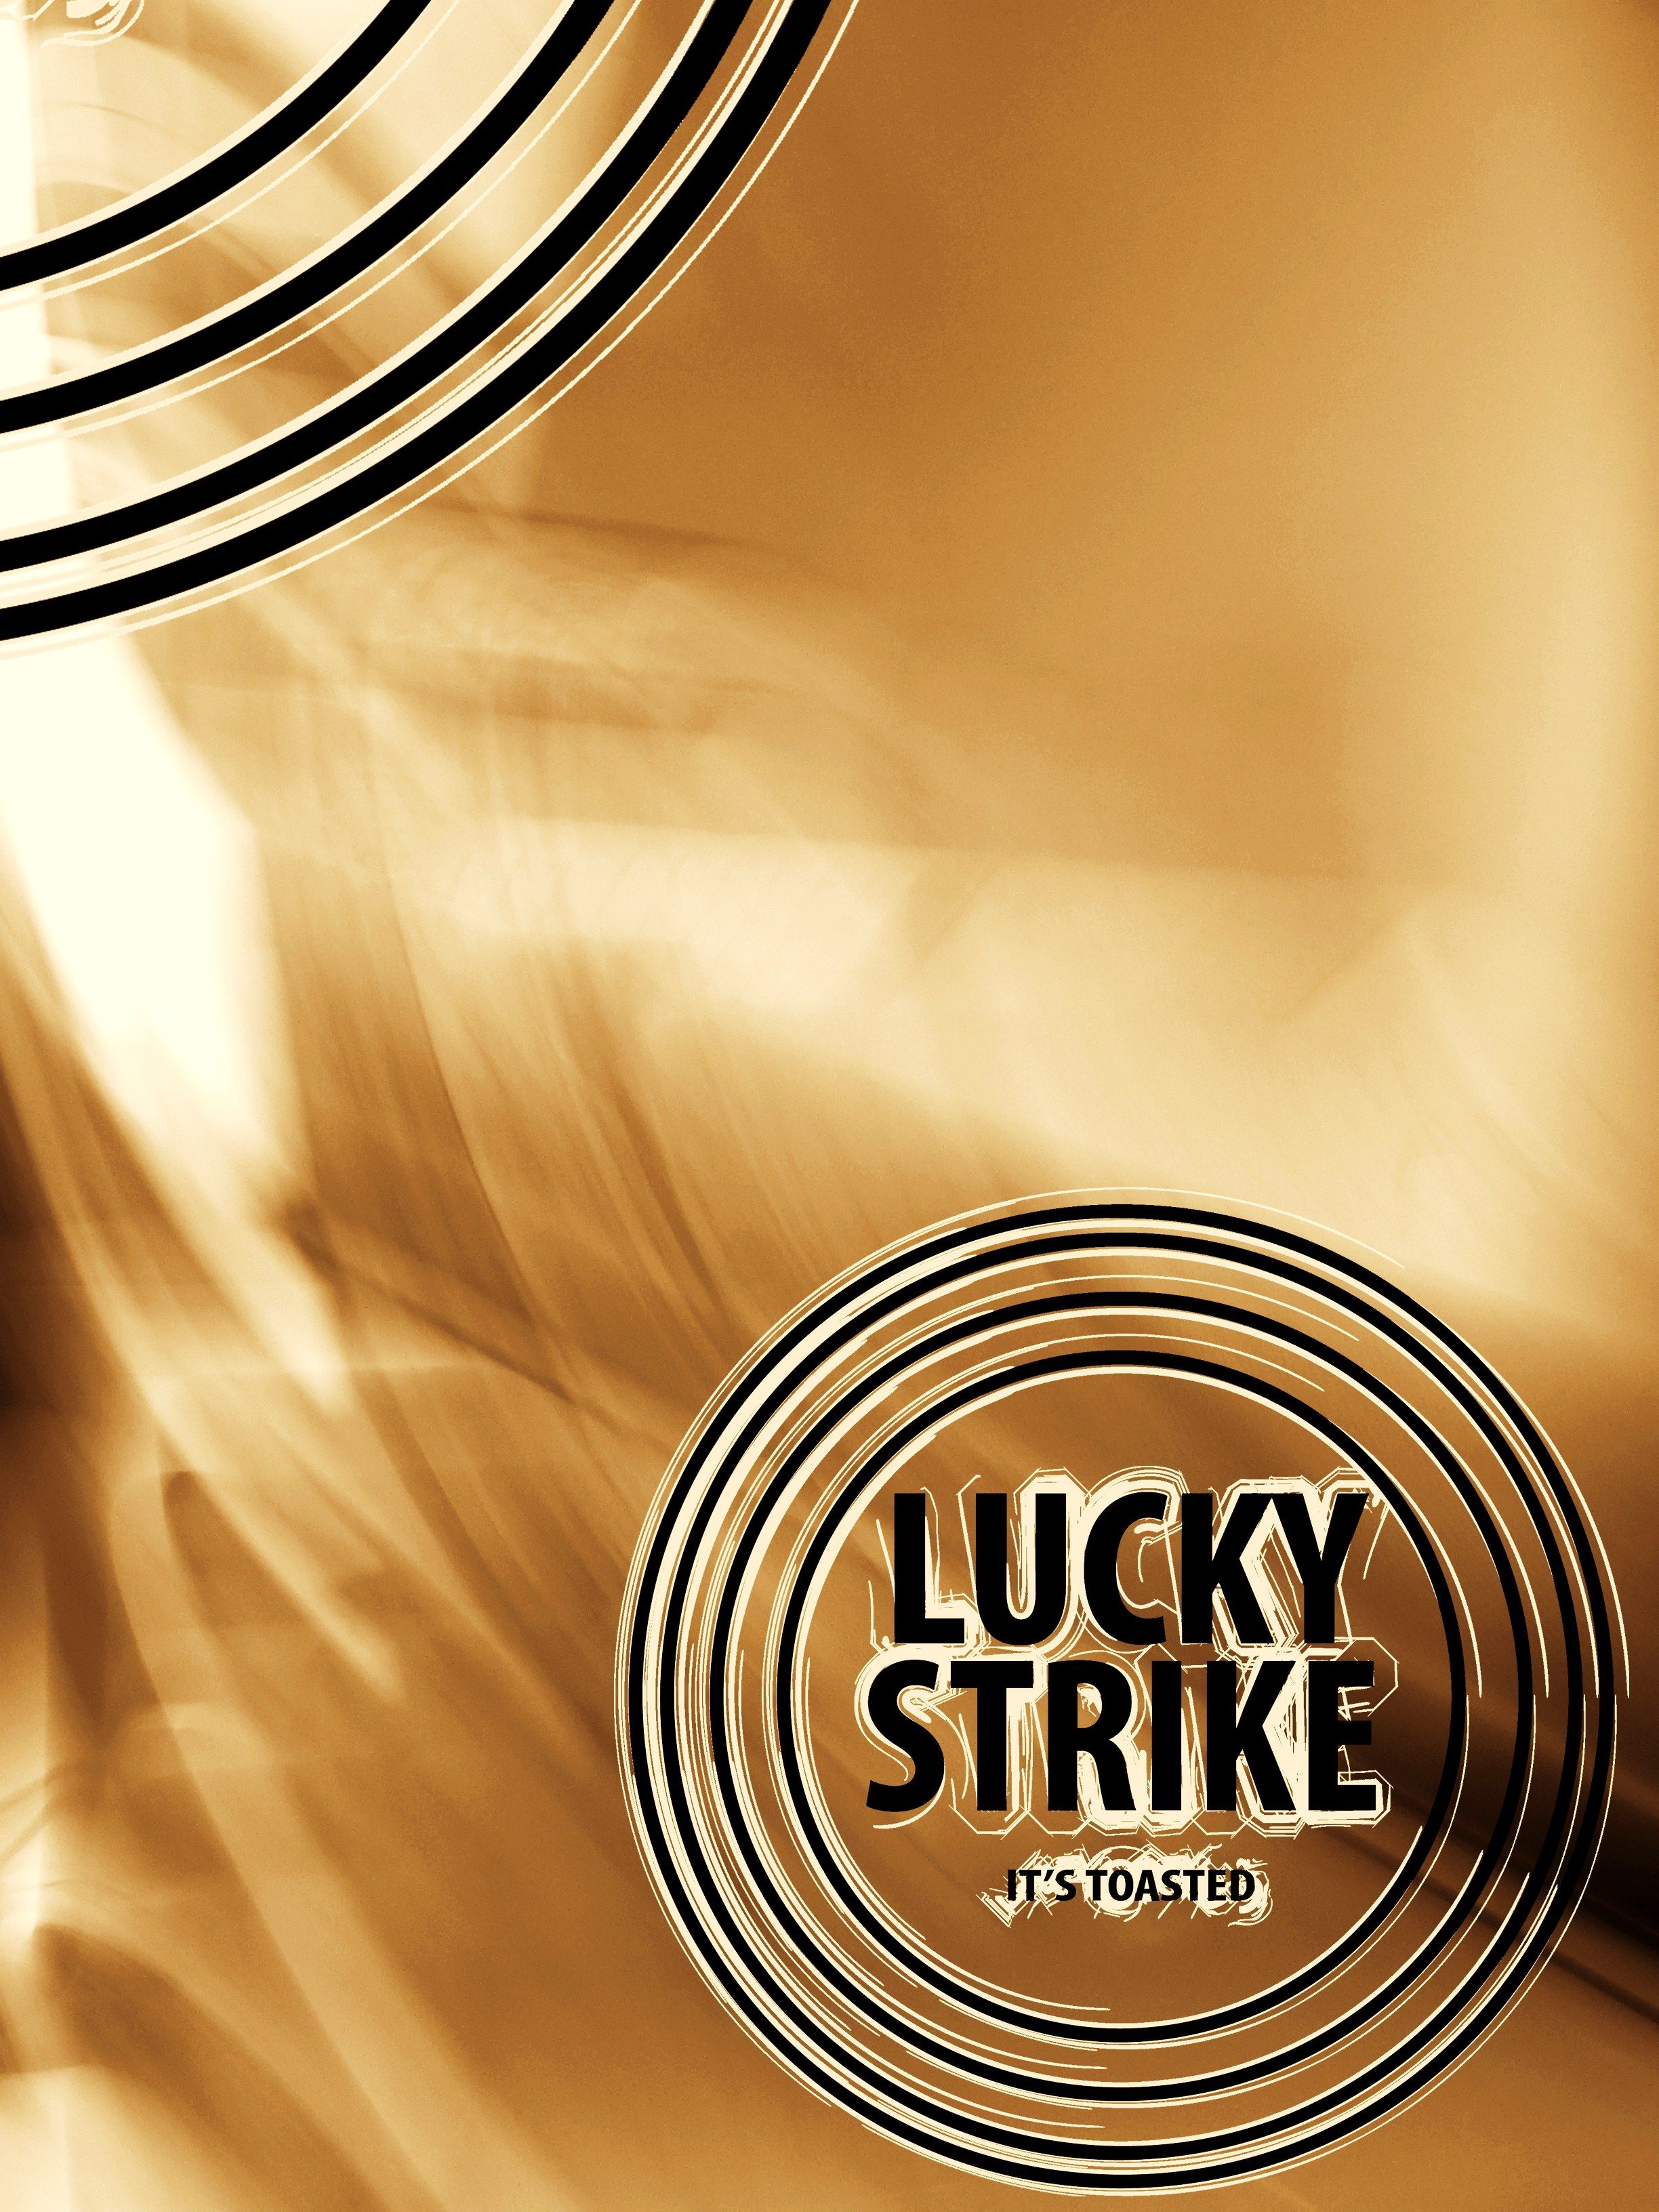 Lucky Strike Wallpaper for phone and desktop